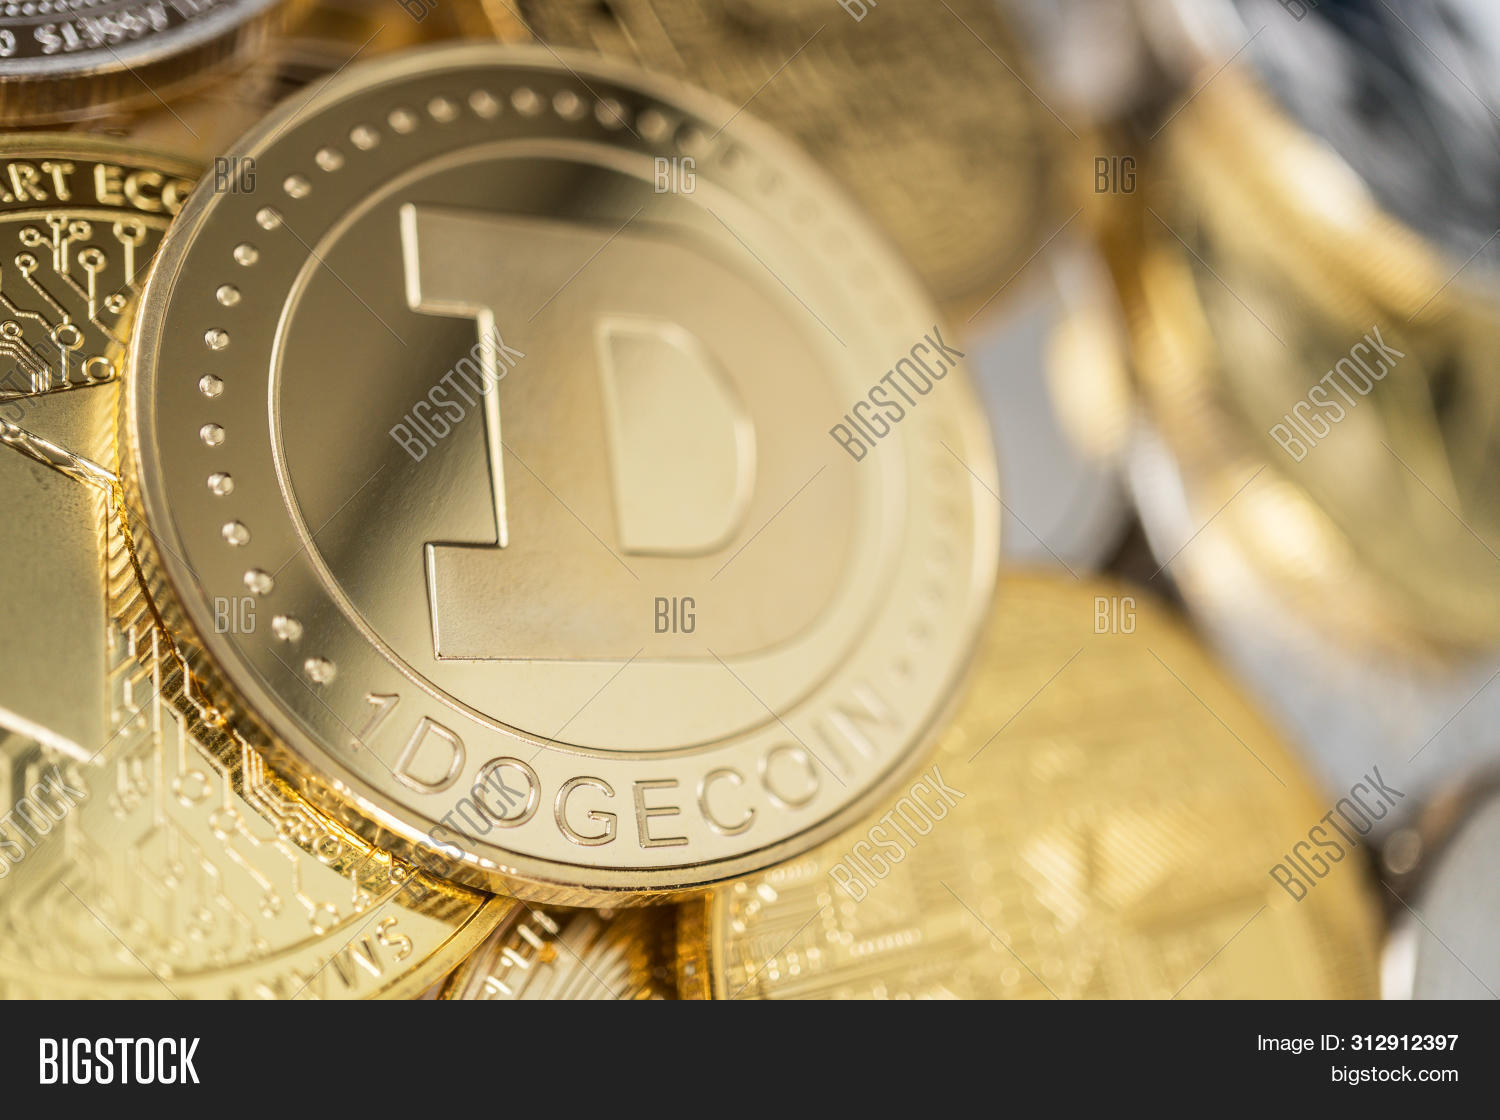 Dogecoin (Doge) Physical Crypto Coin – Don's Village Coins